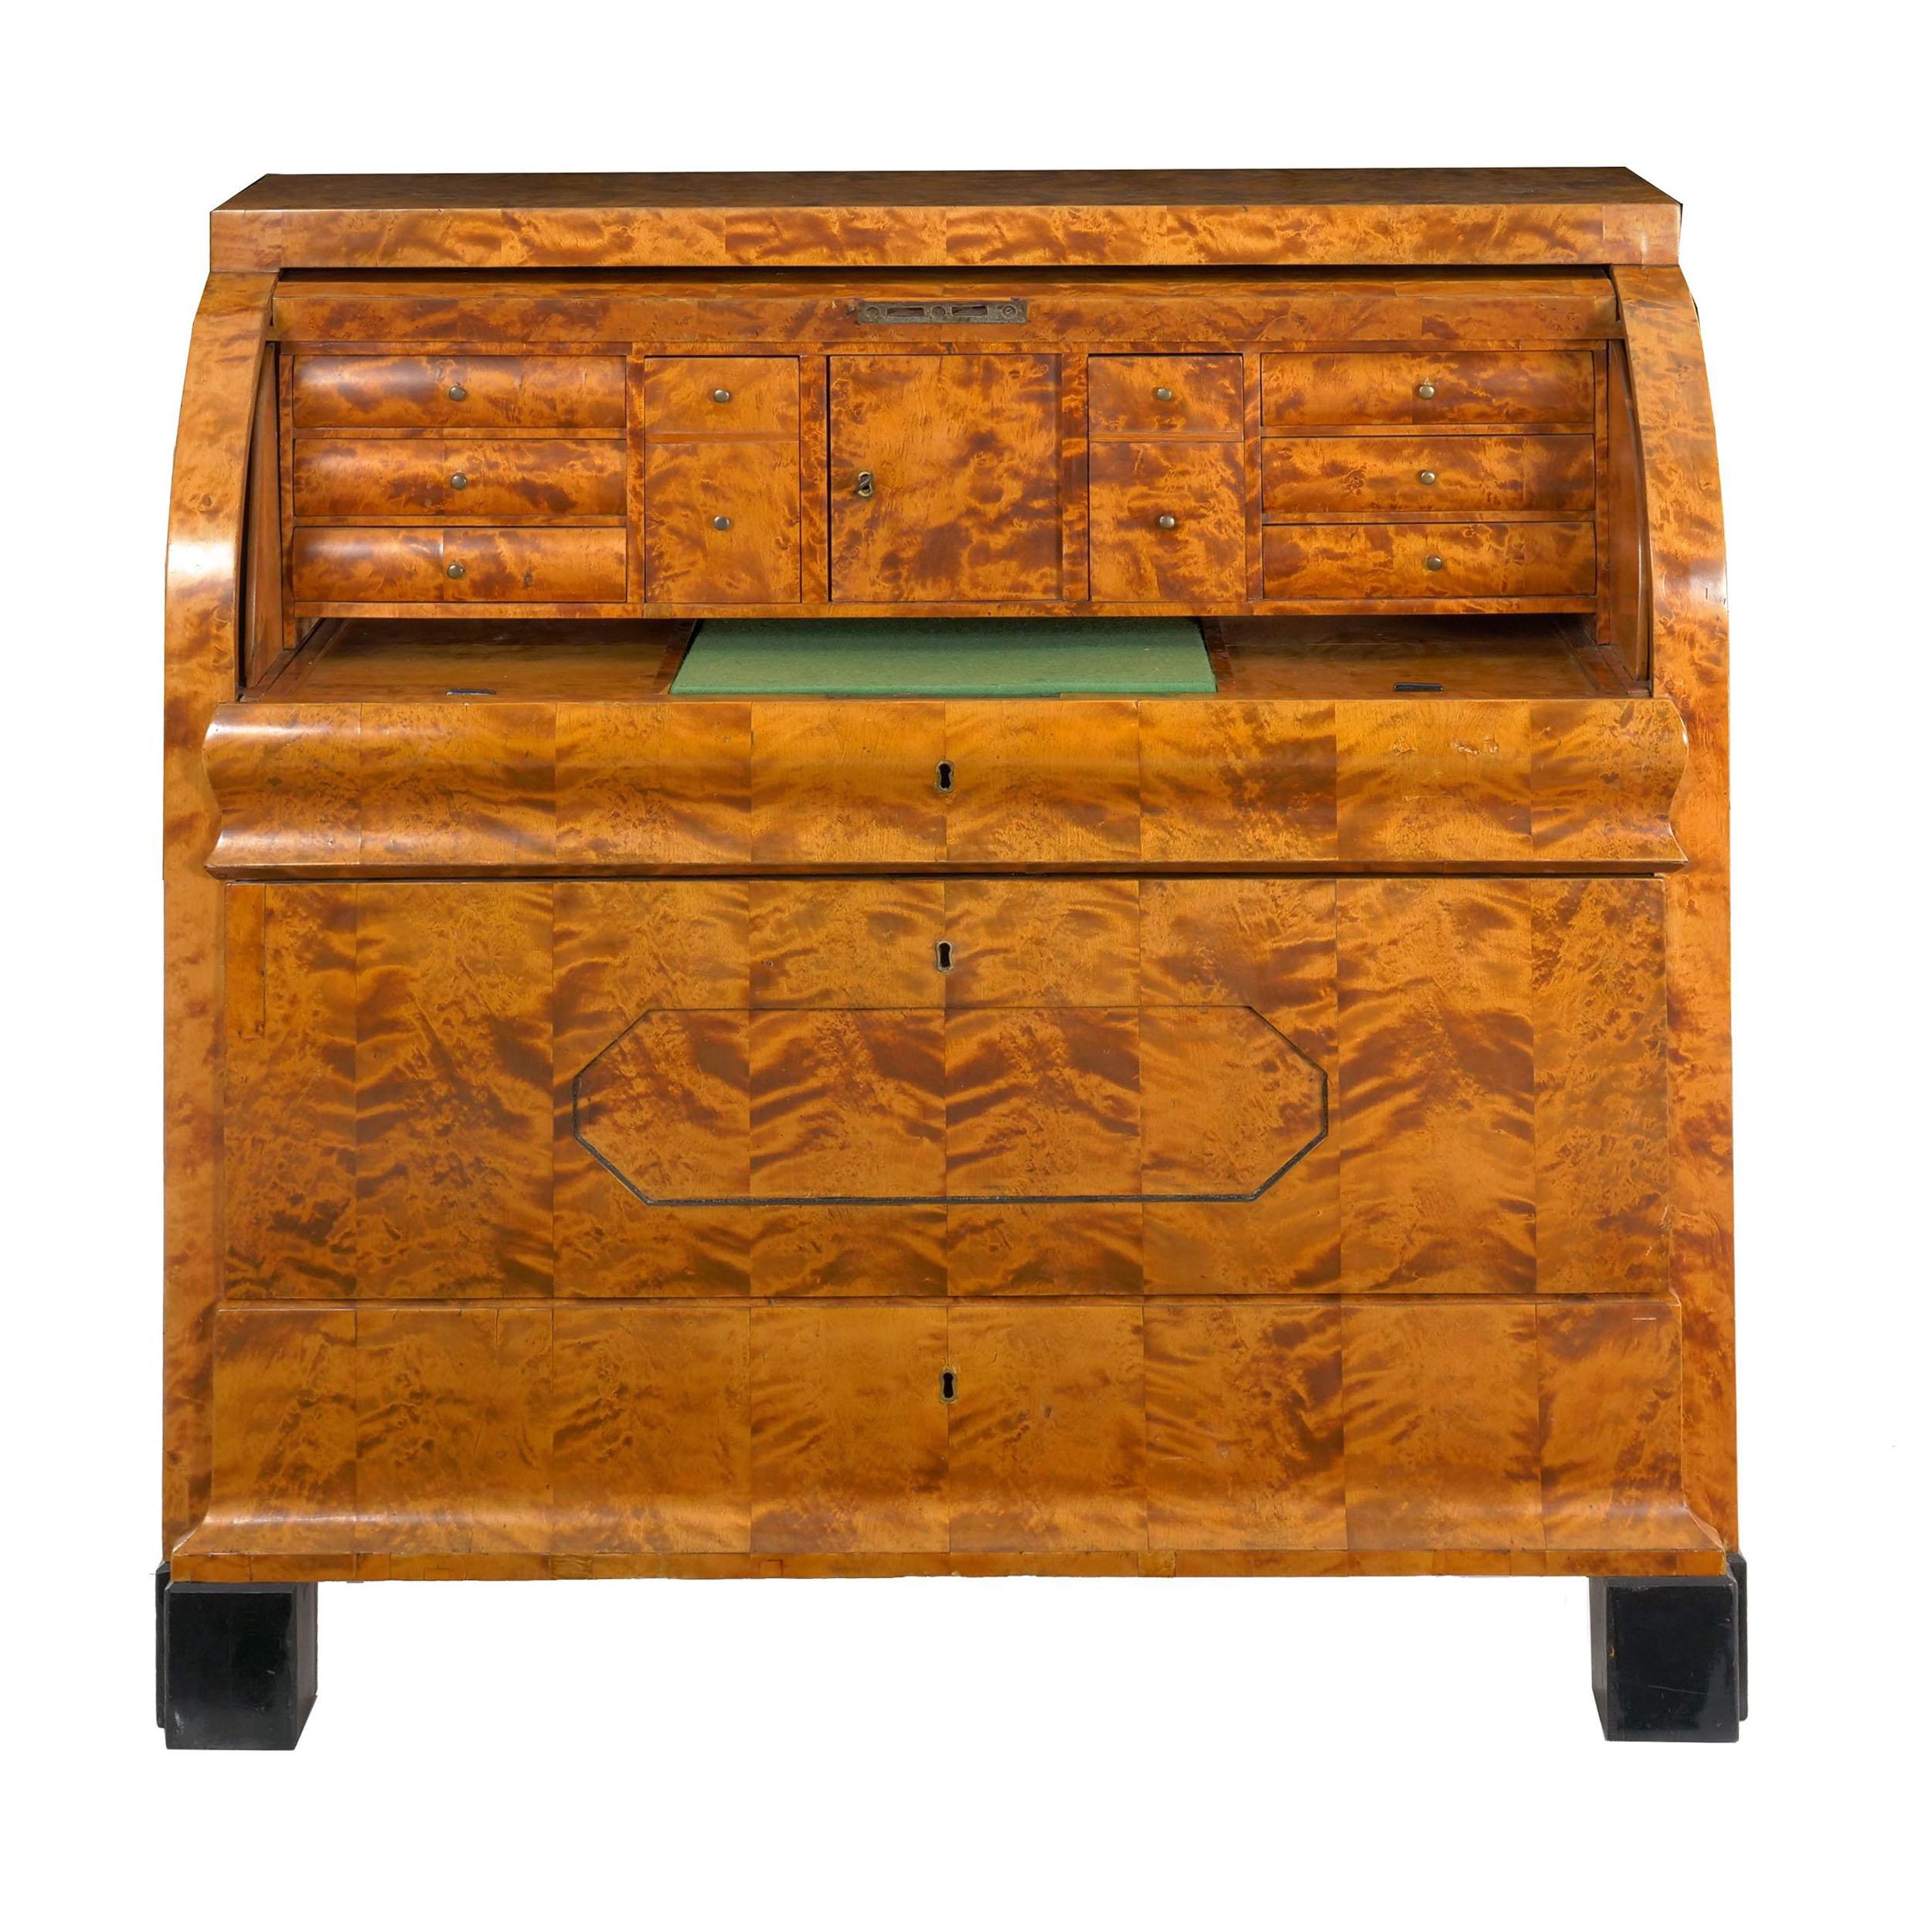 19th Century Austrian Biedermeier Figured-Maple Roll-Top Antique Writing Desk circa 1830-1850